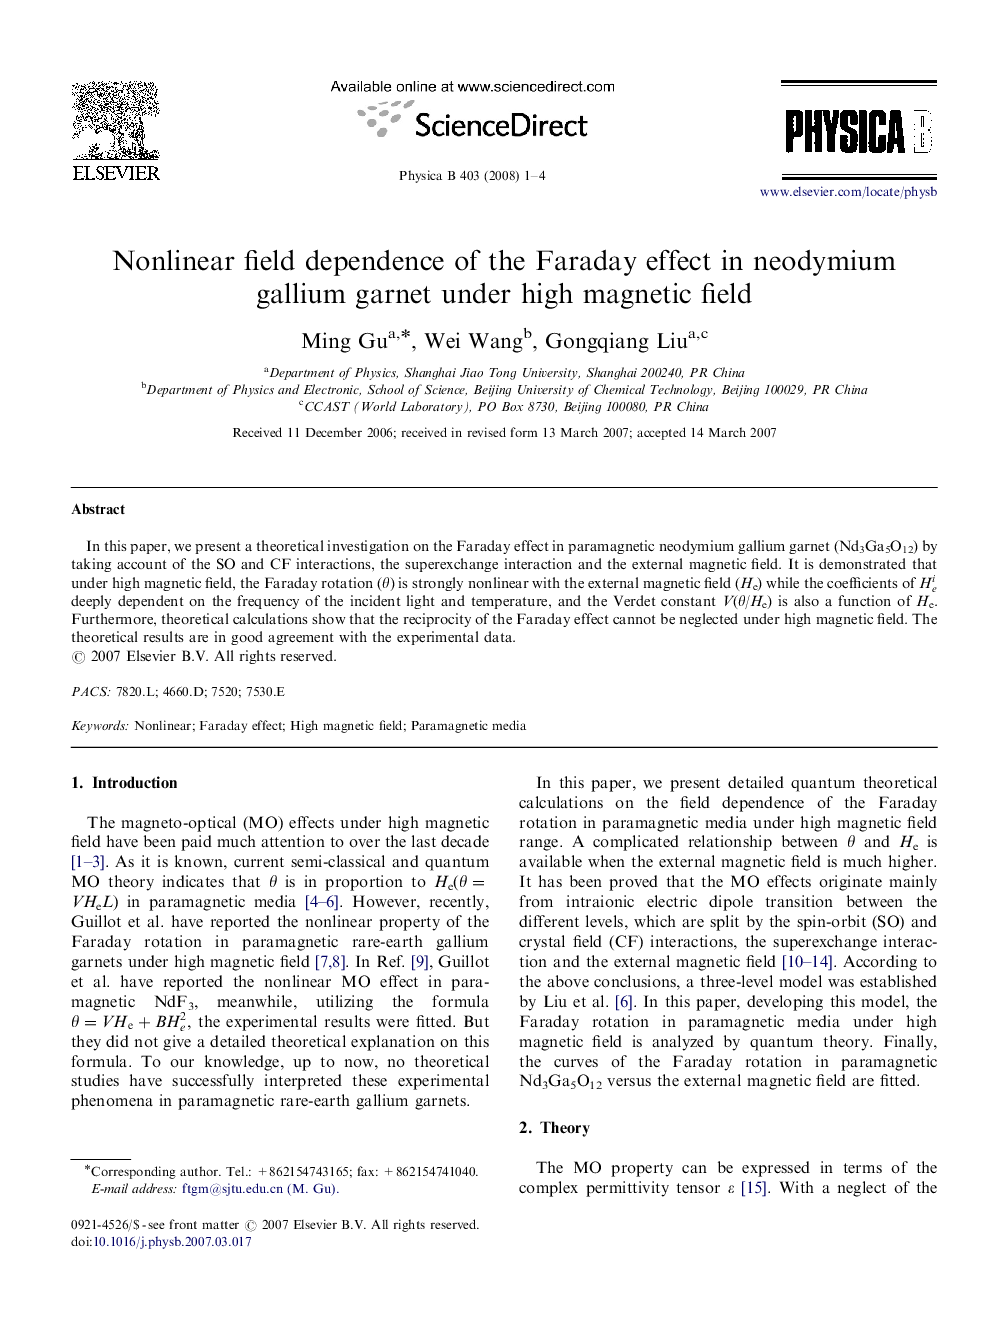 Nonlinear field dependence of the Faraday effect in neodymium gallium garnet under high magnetic field